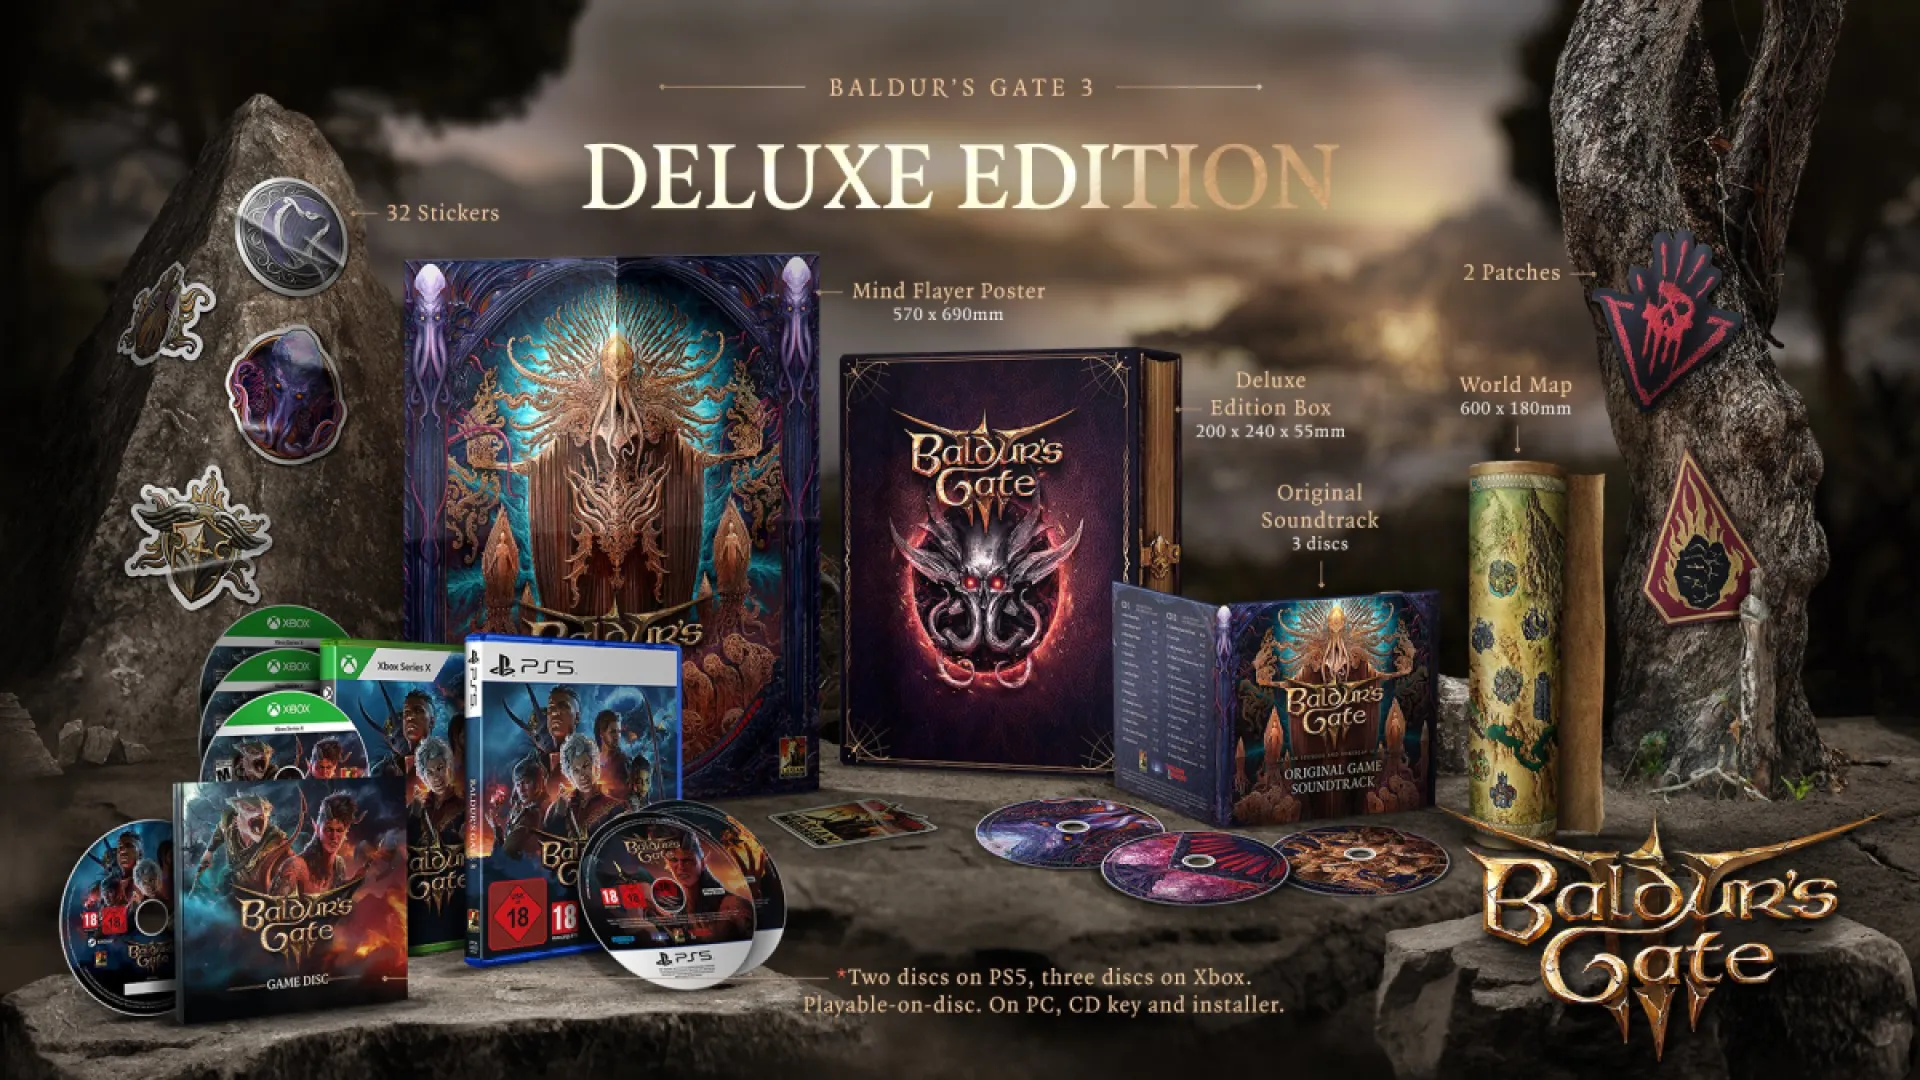 Baldur's Gate 3 Deluxe Edition merchandise. 